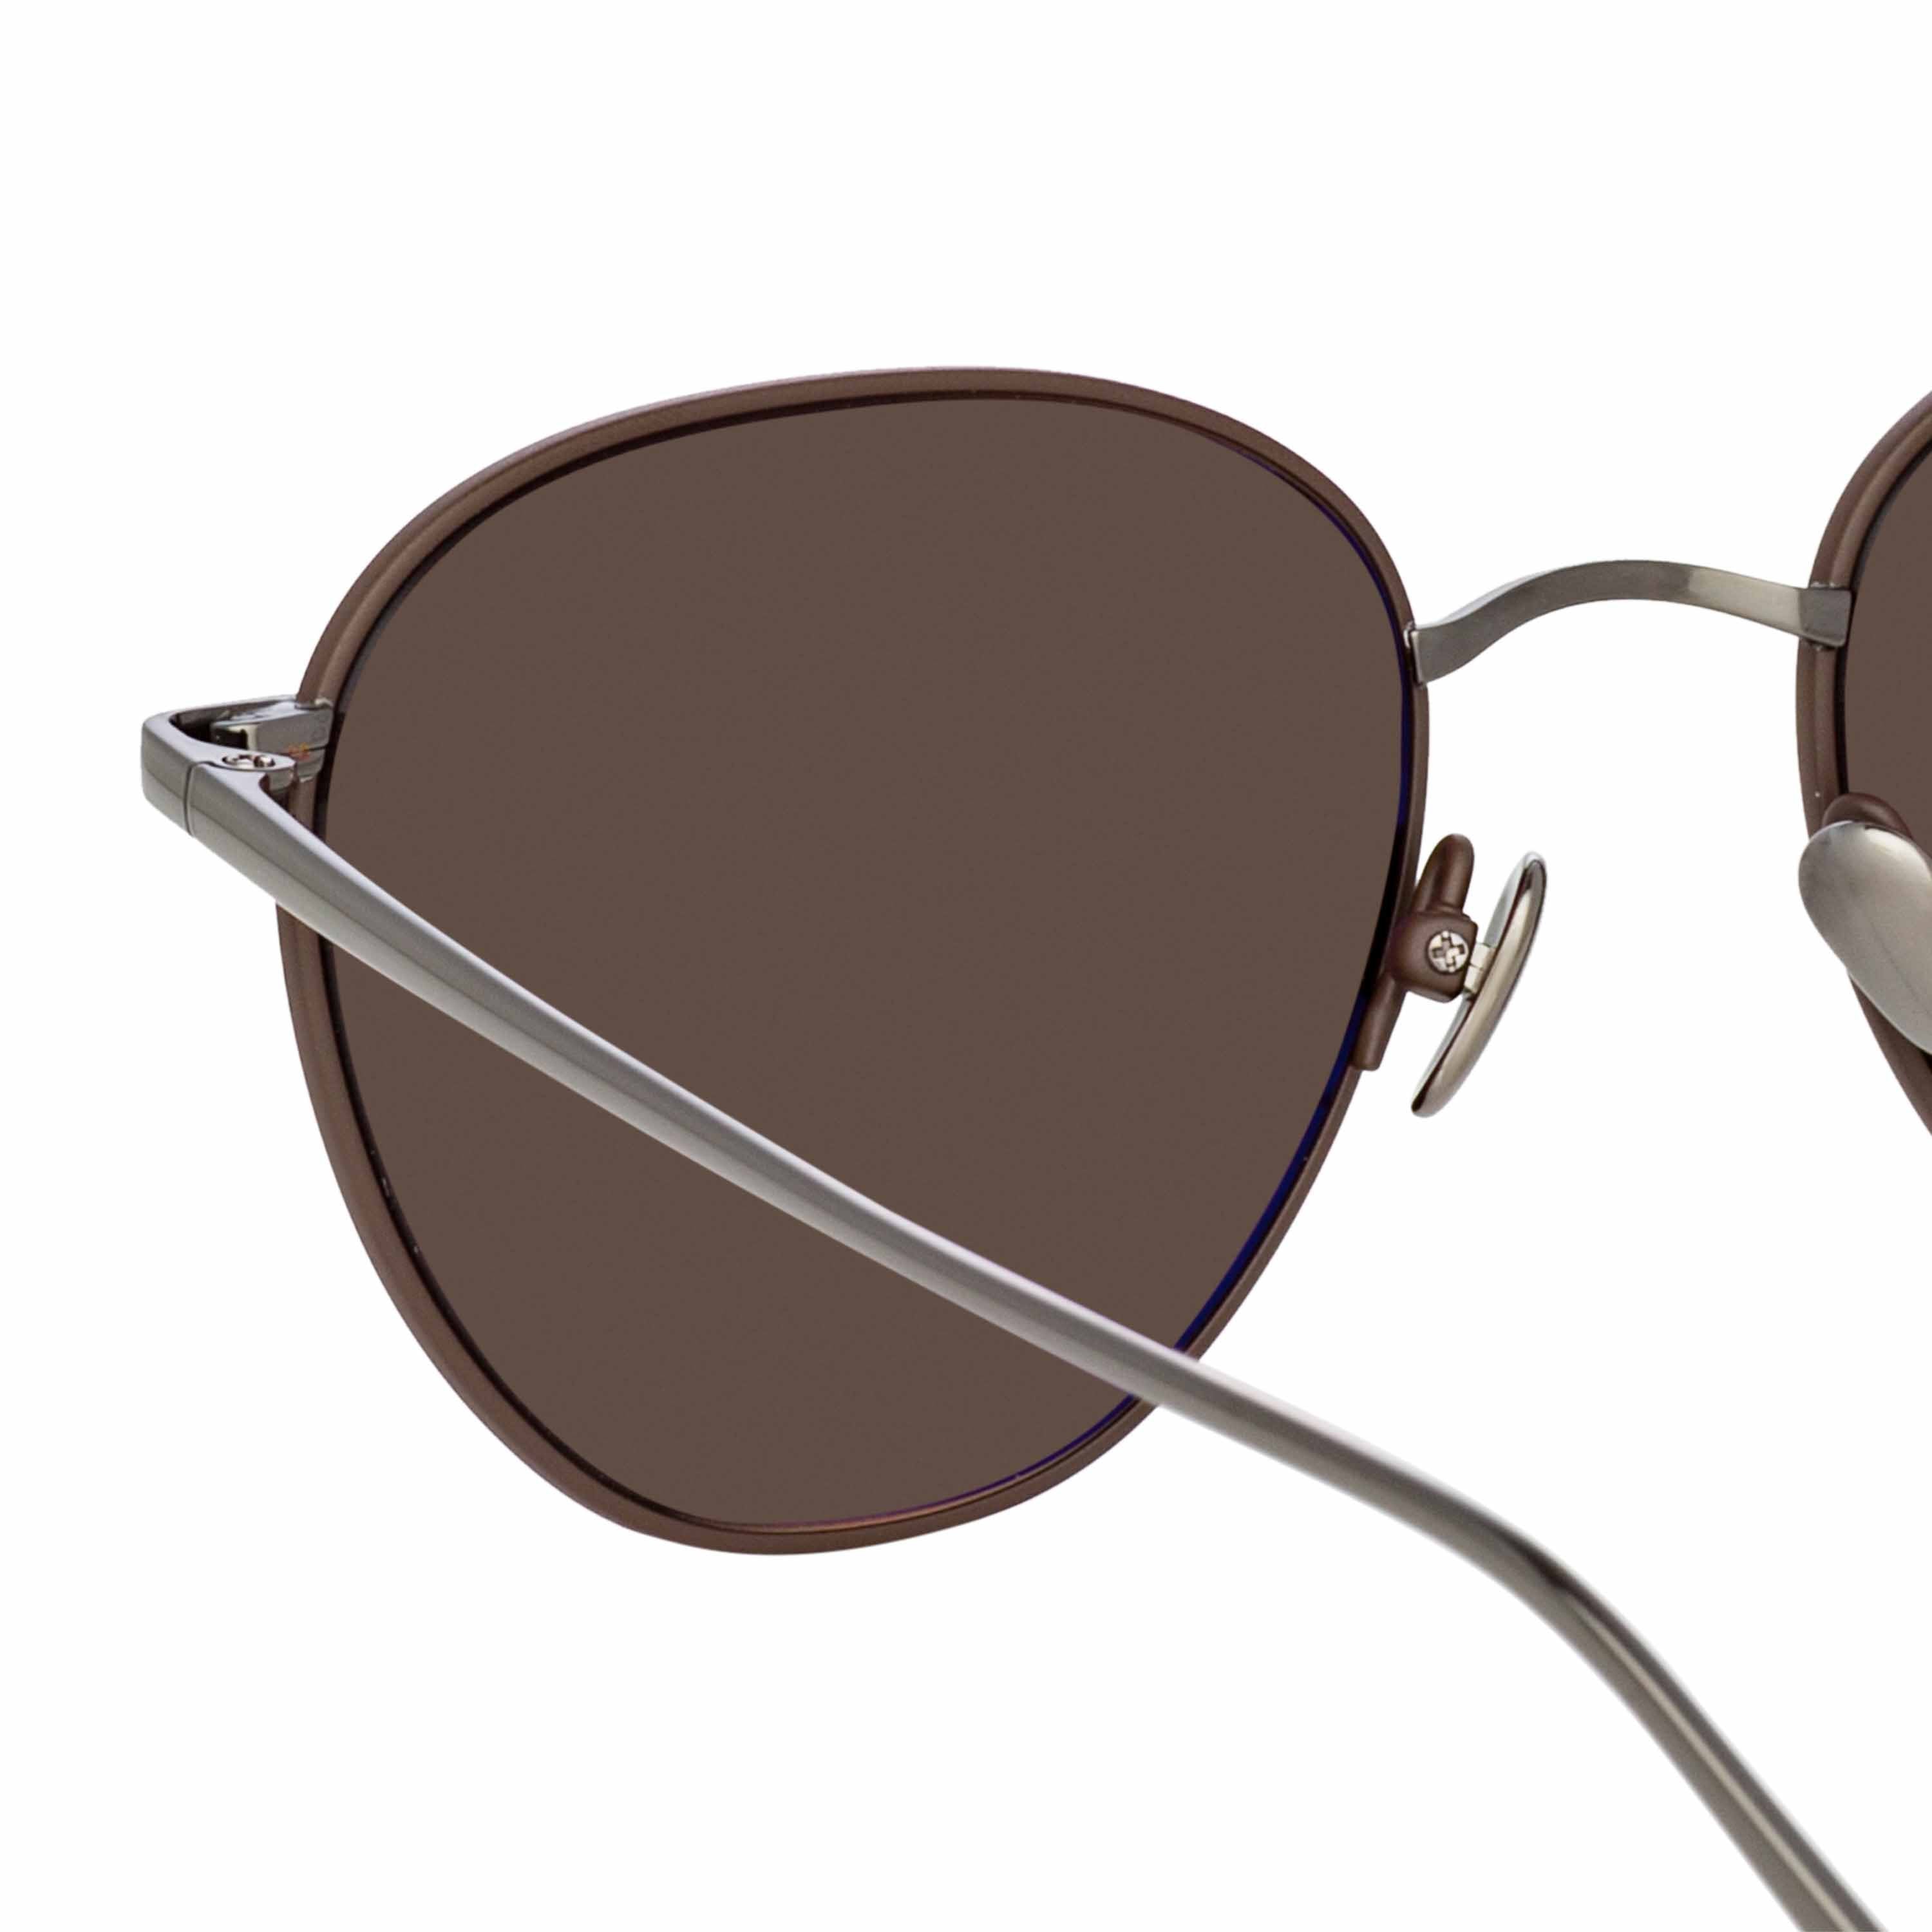 Color_LFL819C27SUN - Raif Square Sunglasses in Nickel and Brown